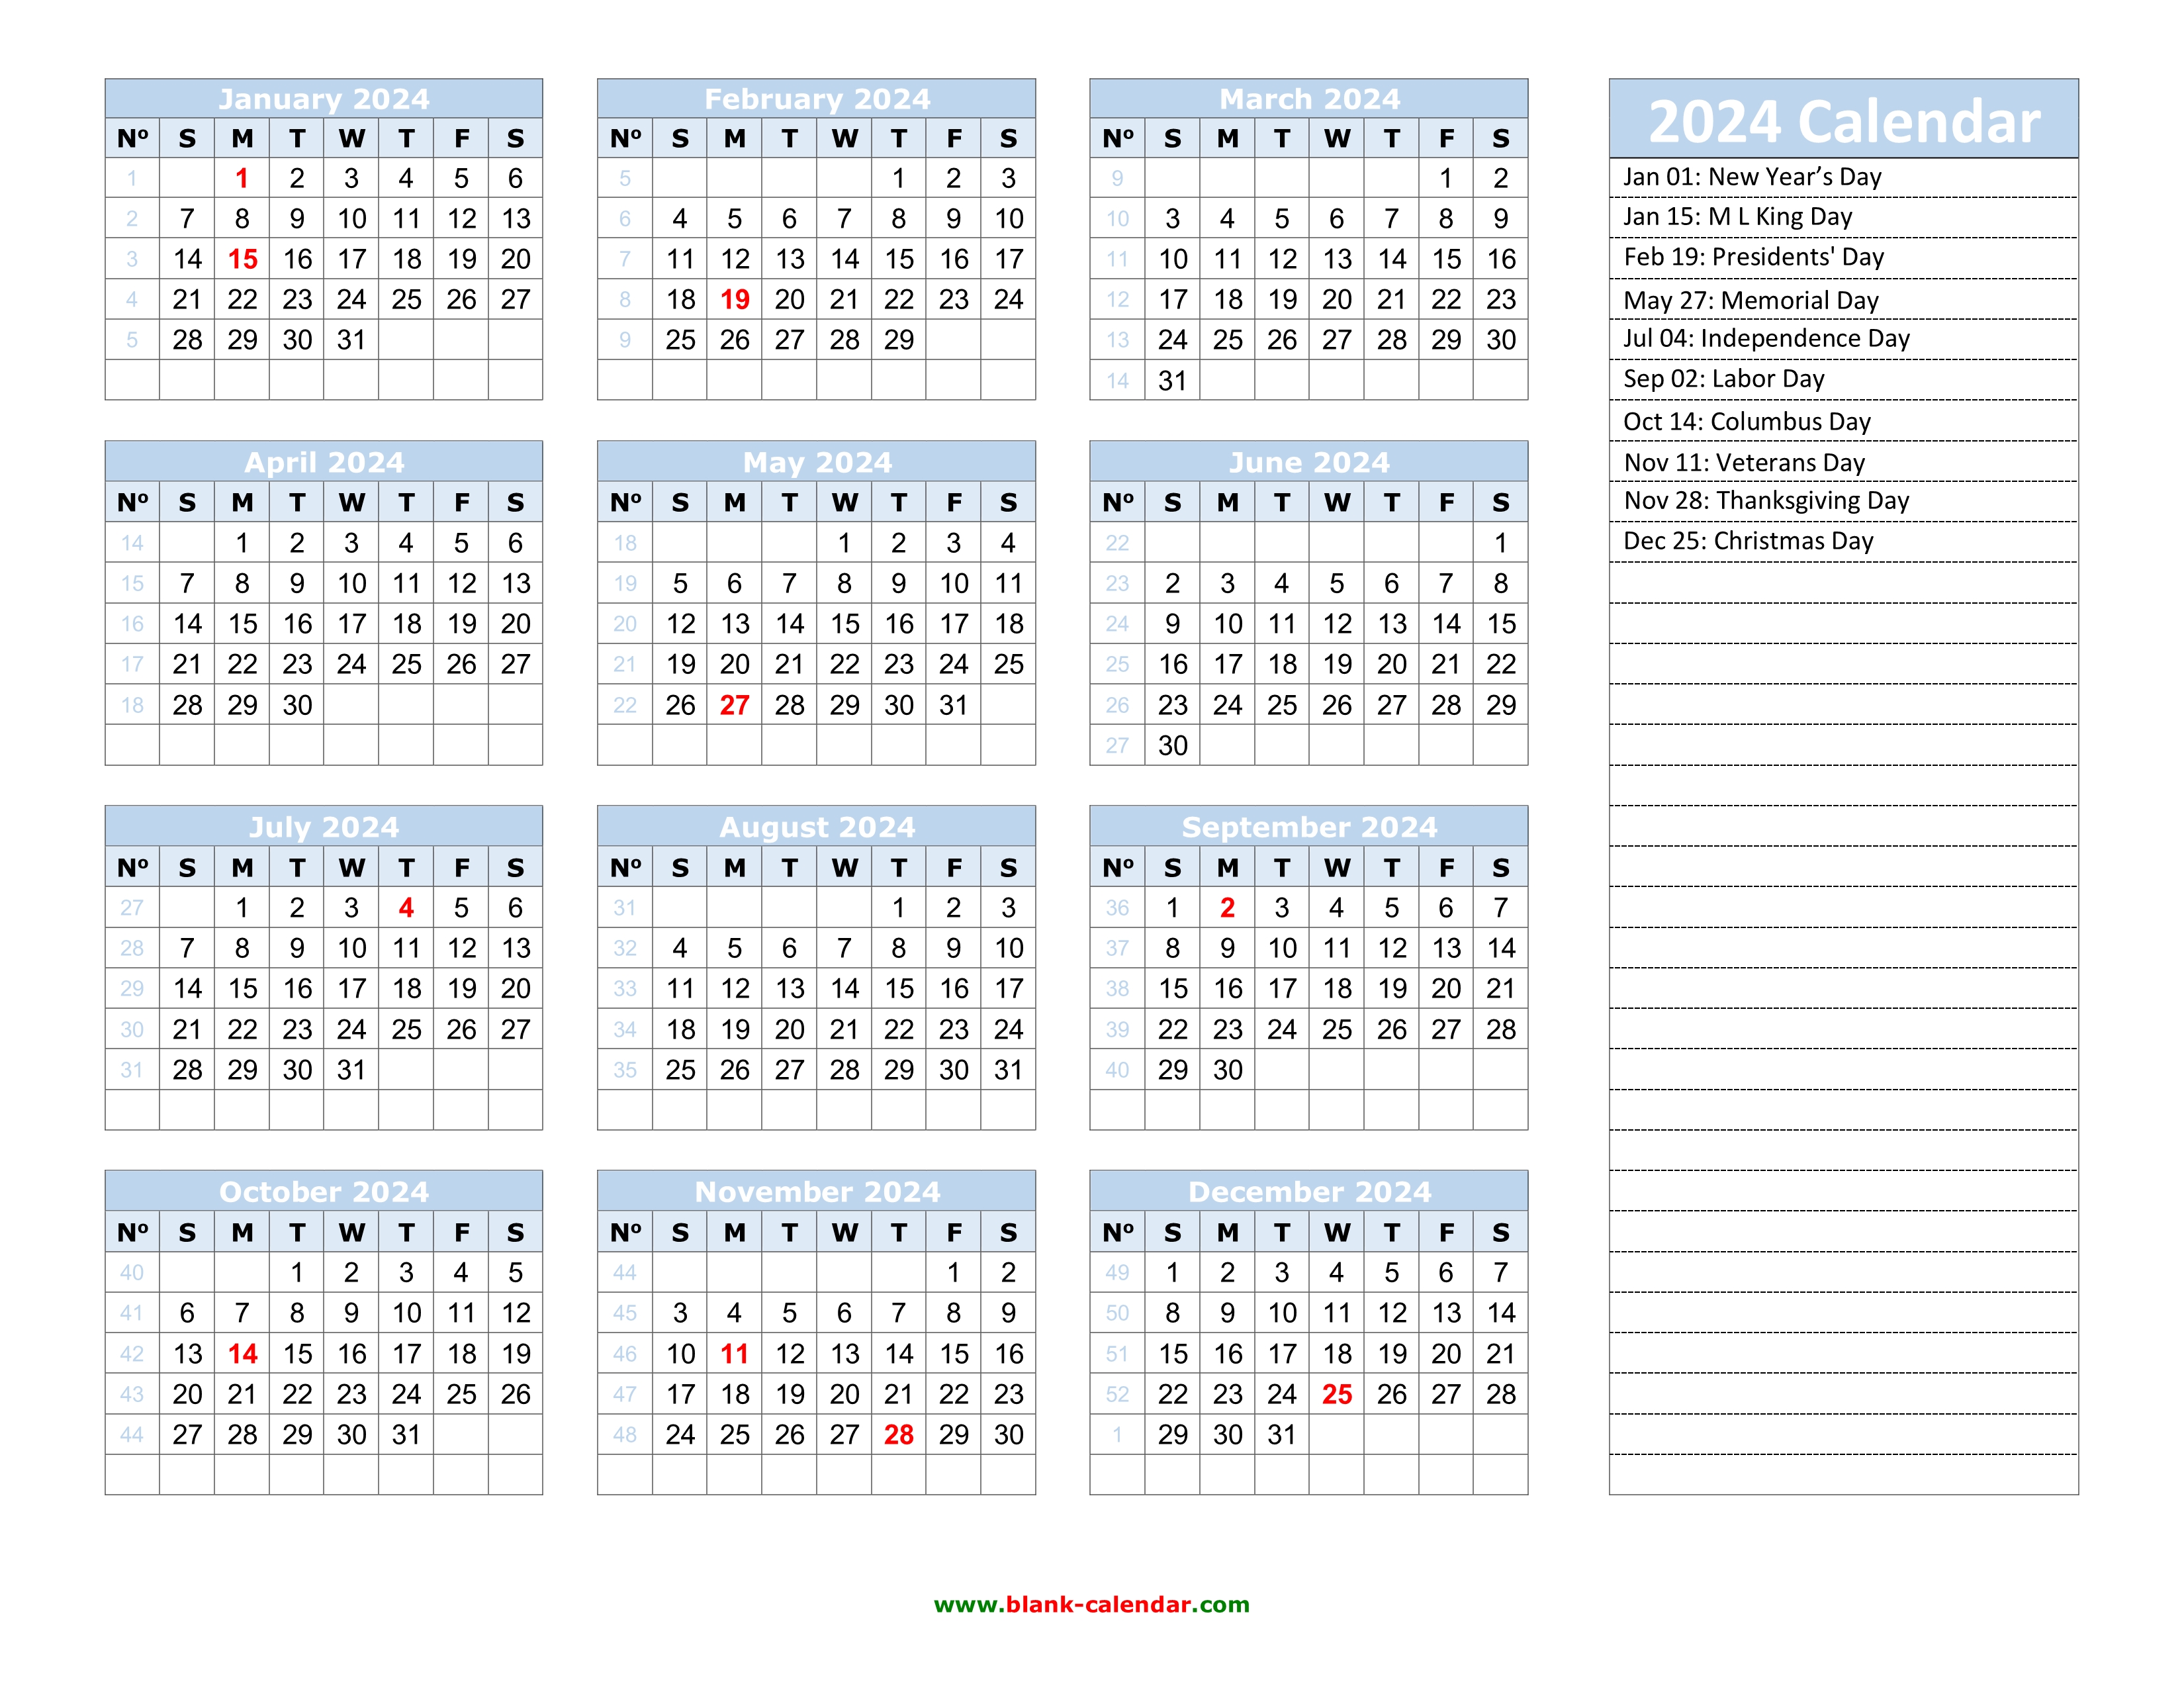 Annual Calendar 2024 Google Sheets Daryl Nicoline